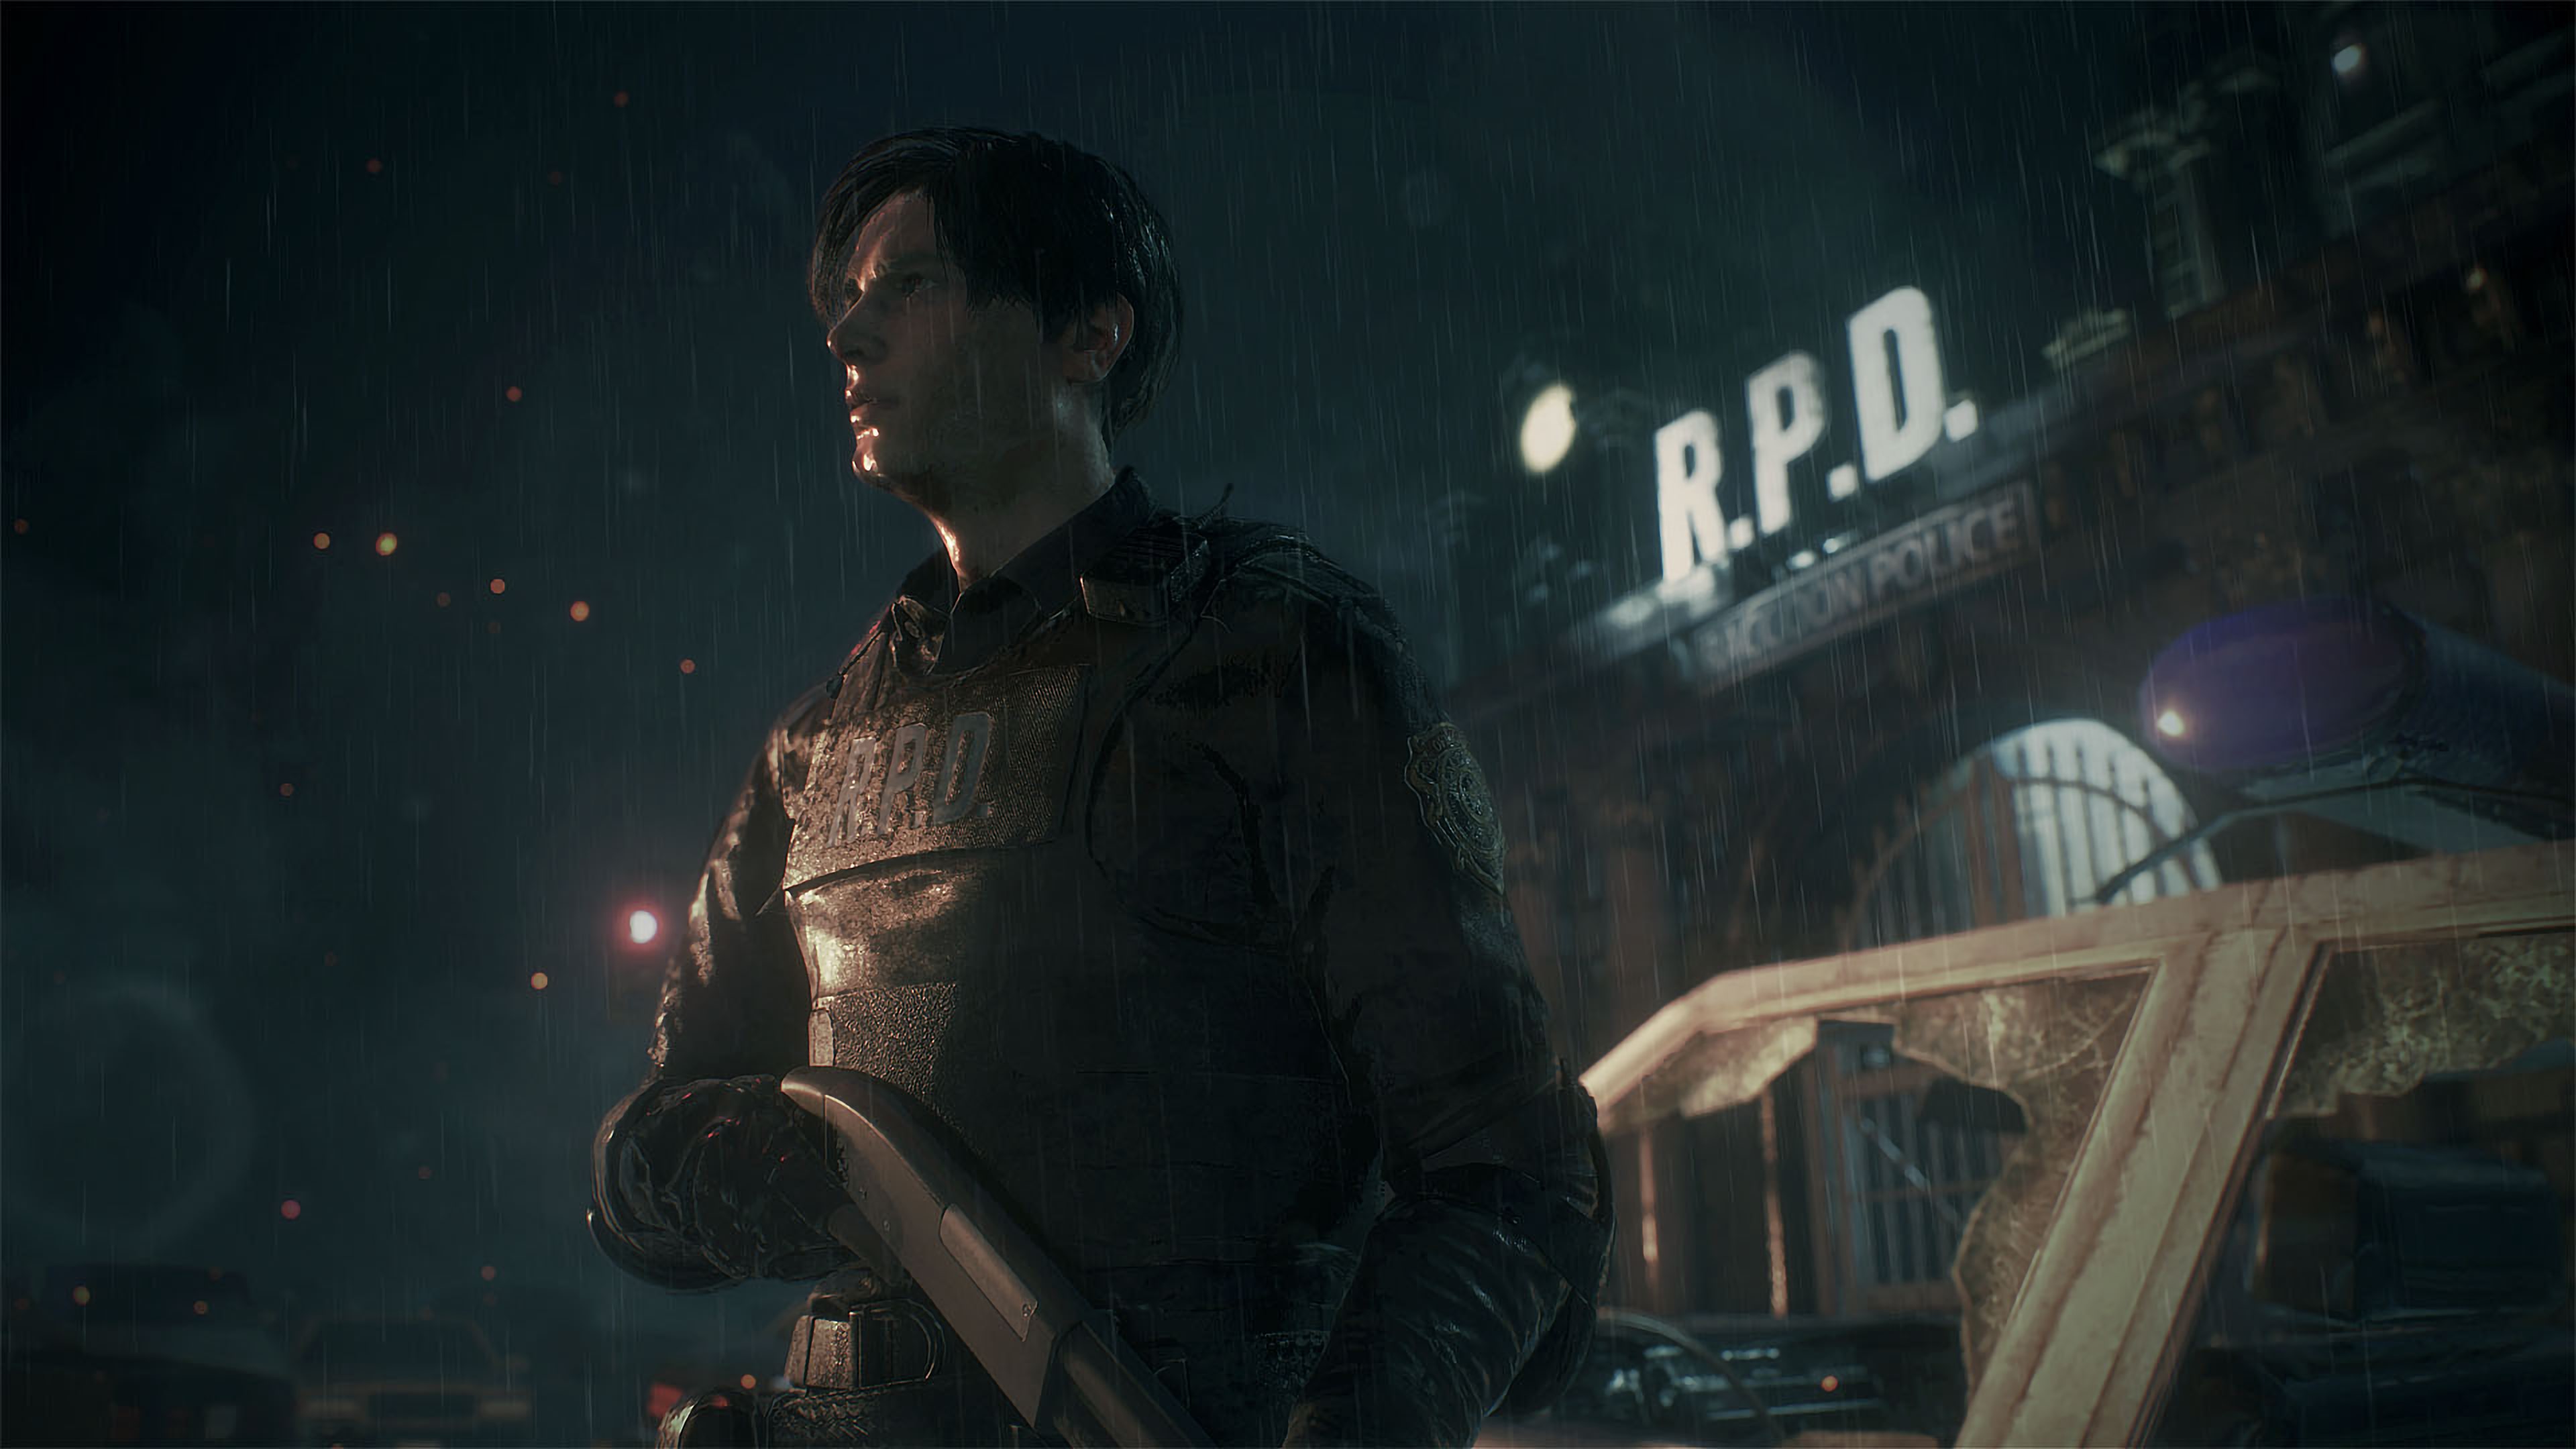 Resident Evil 2 Remake (PS4 / PlayStation 4) BRAND NEW / Region Free  13388560523